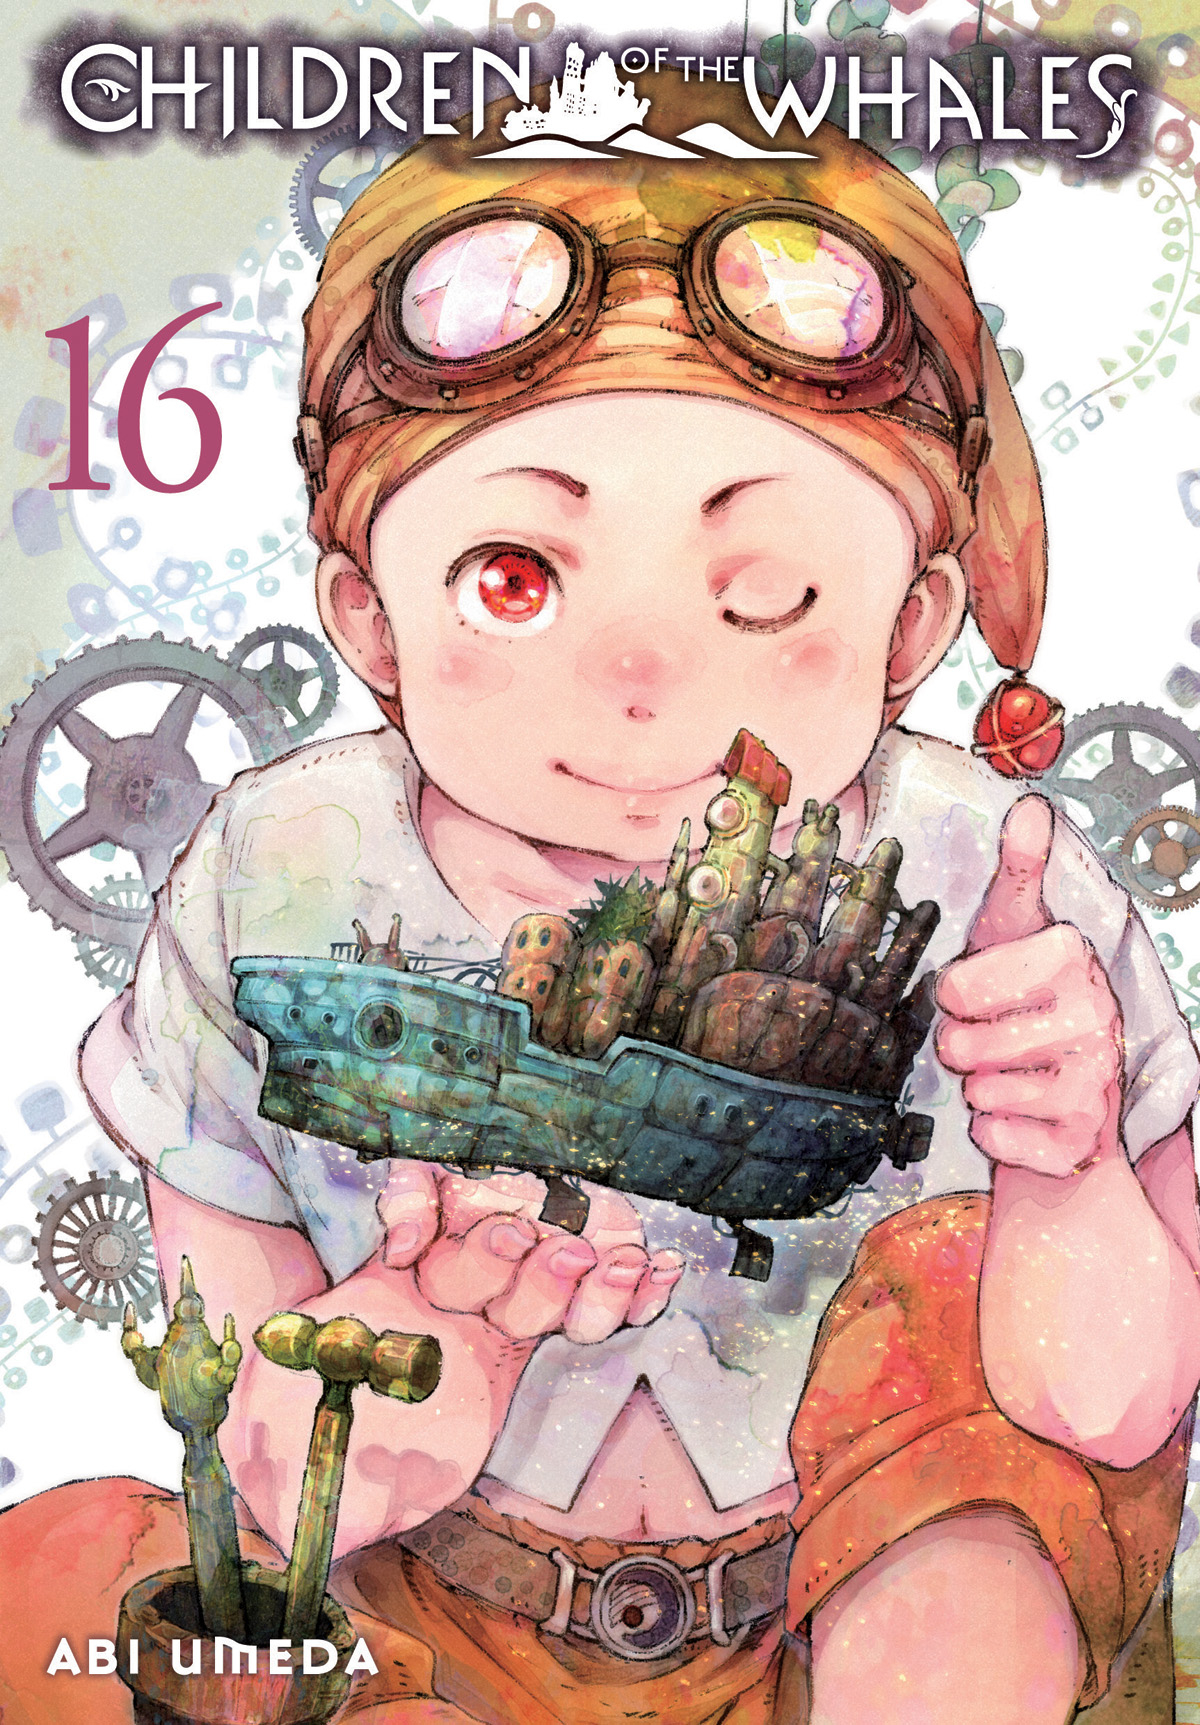 Children of Whales Manga Volume 16